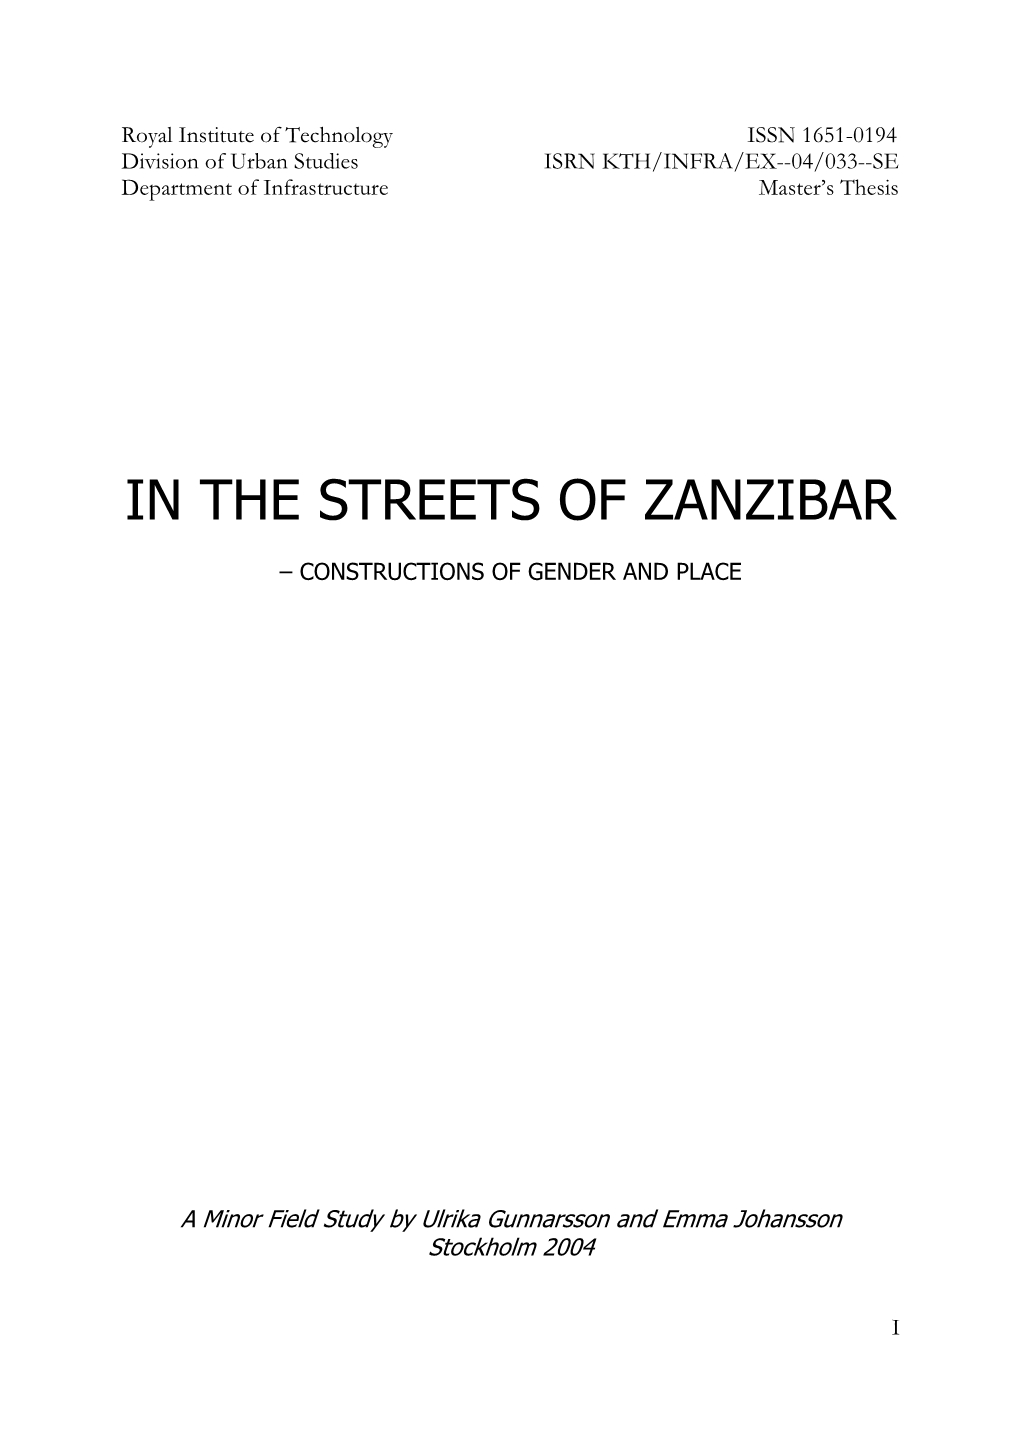 In the Streets of Zanzibar